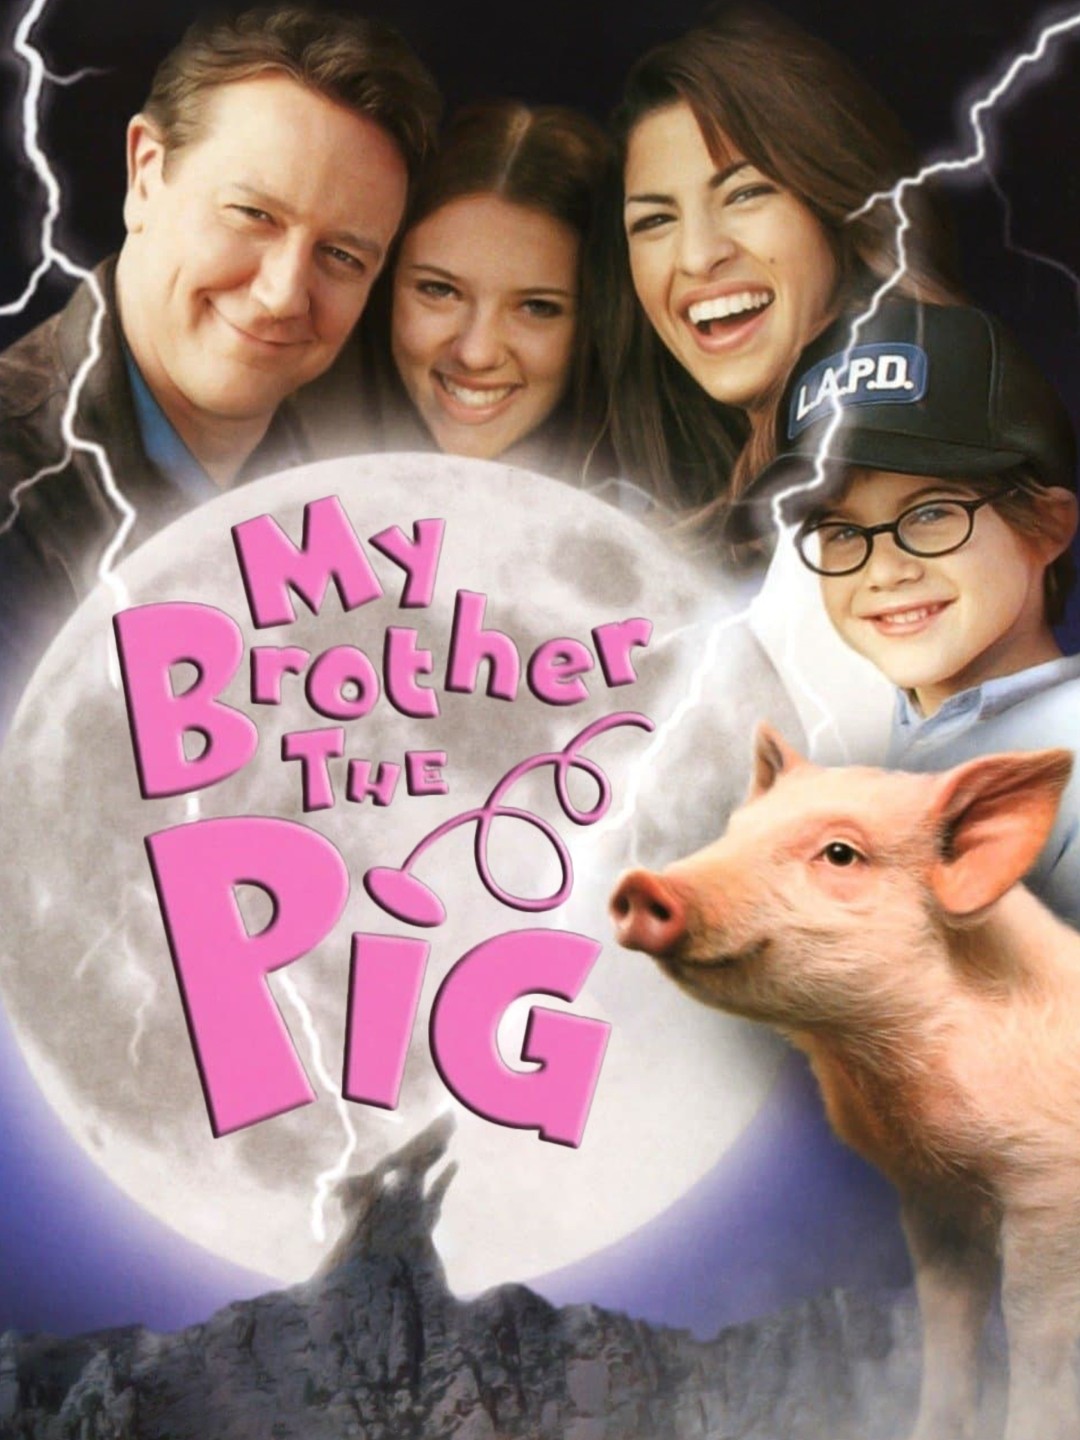 Piggy - Rotten Tomatoes